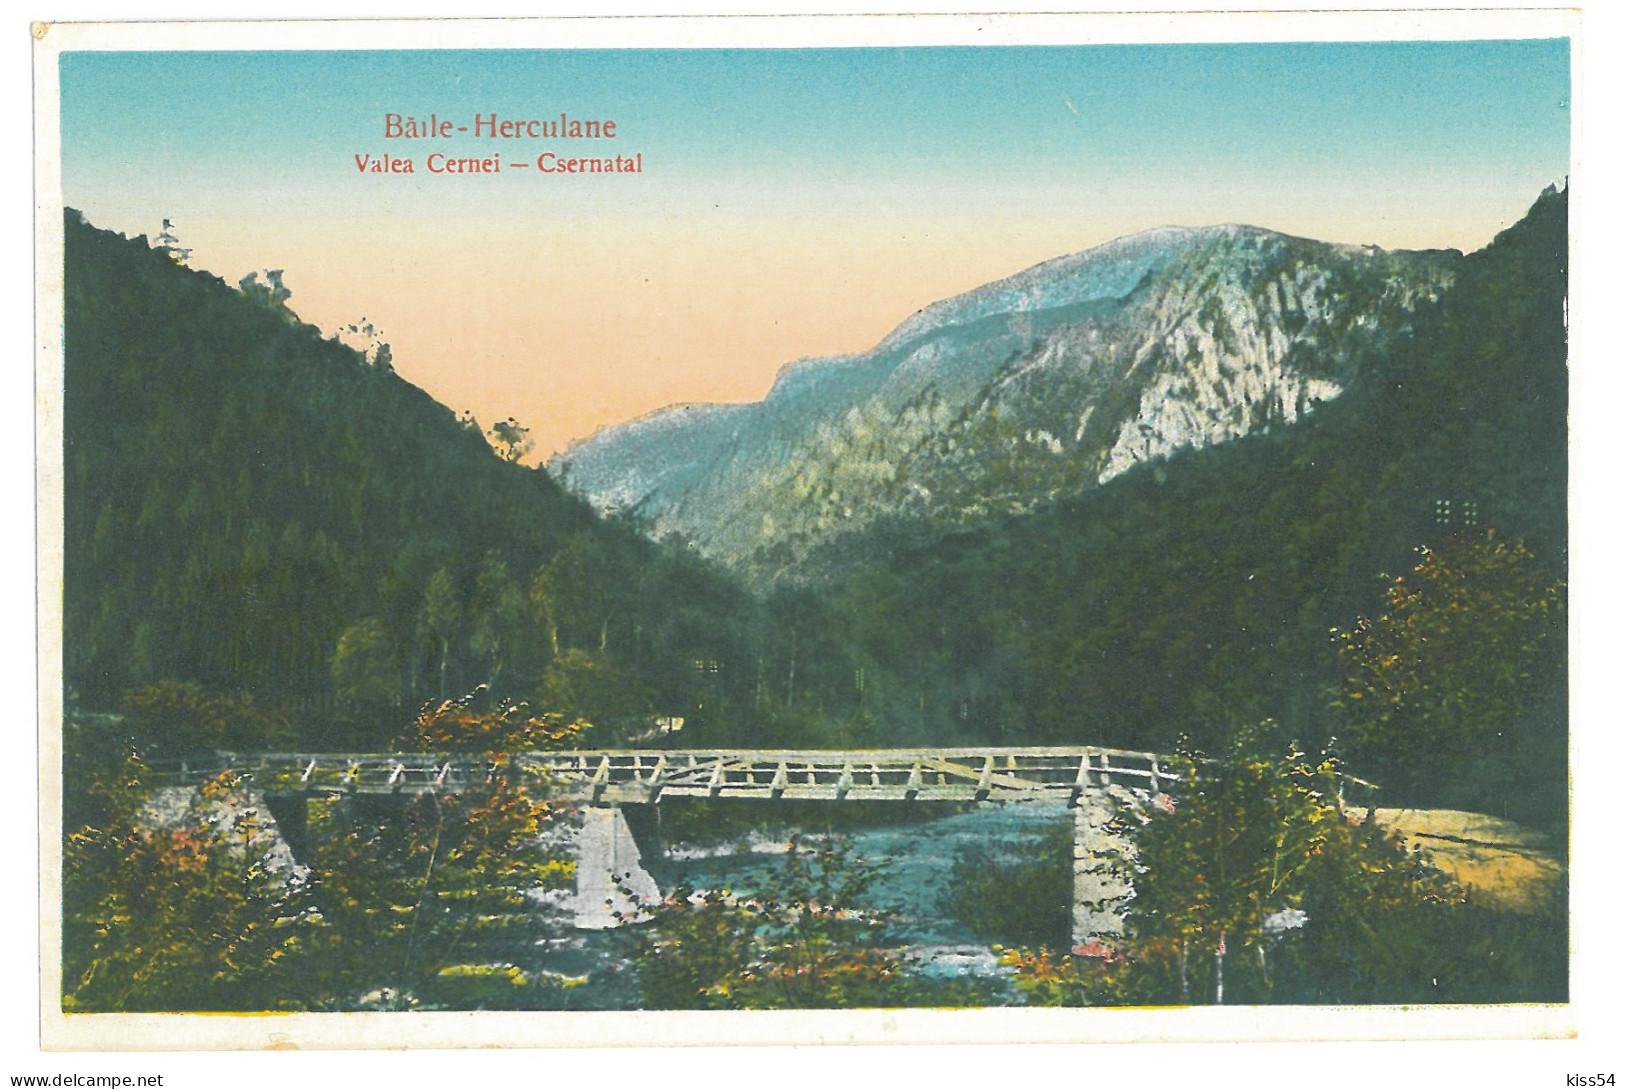 RO 84 - 25077 Baile HERCULANE, Cerna River, Bridge, Romania - Old Postcard - Unused - Romania